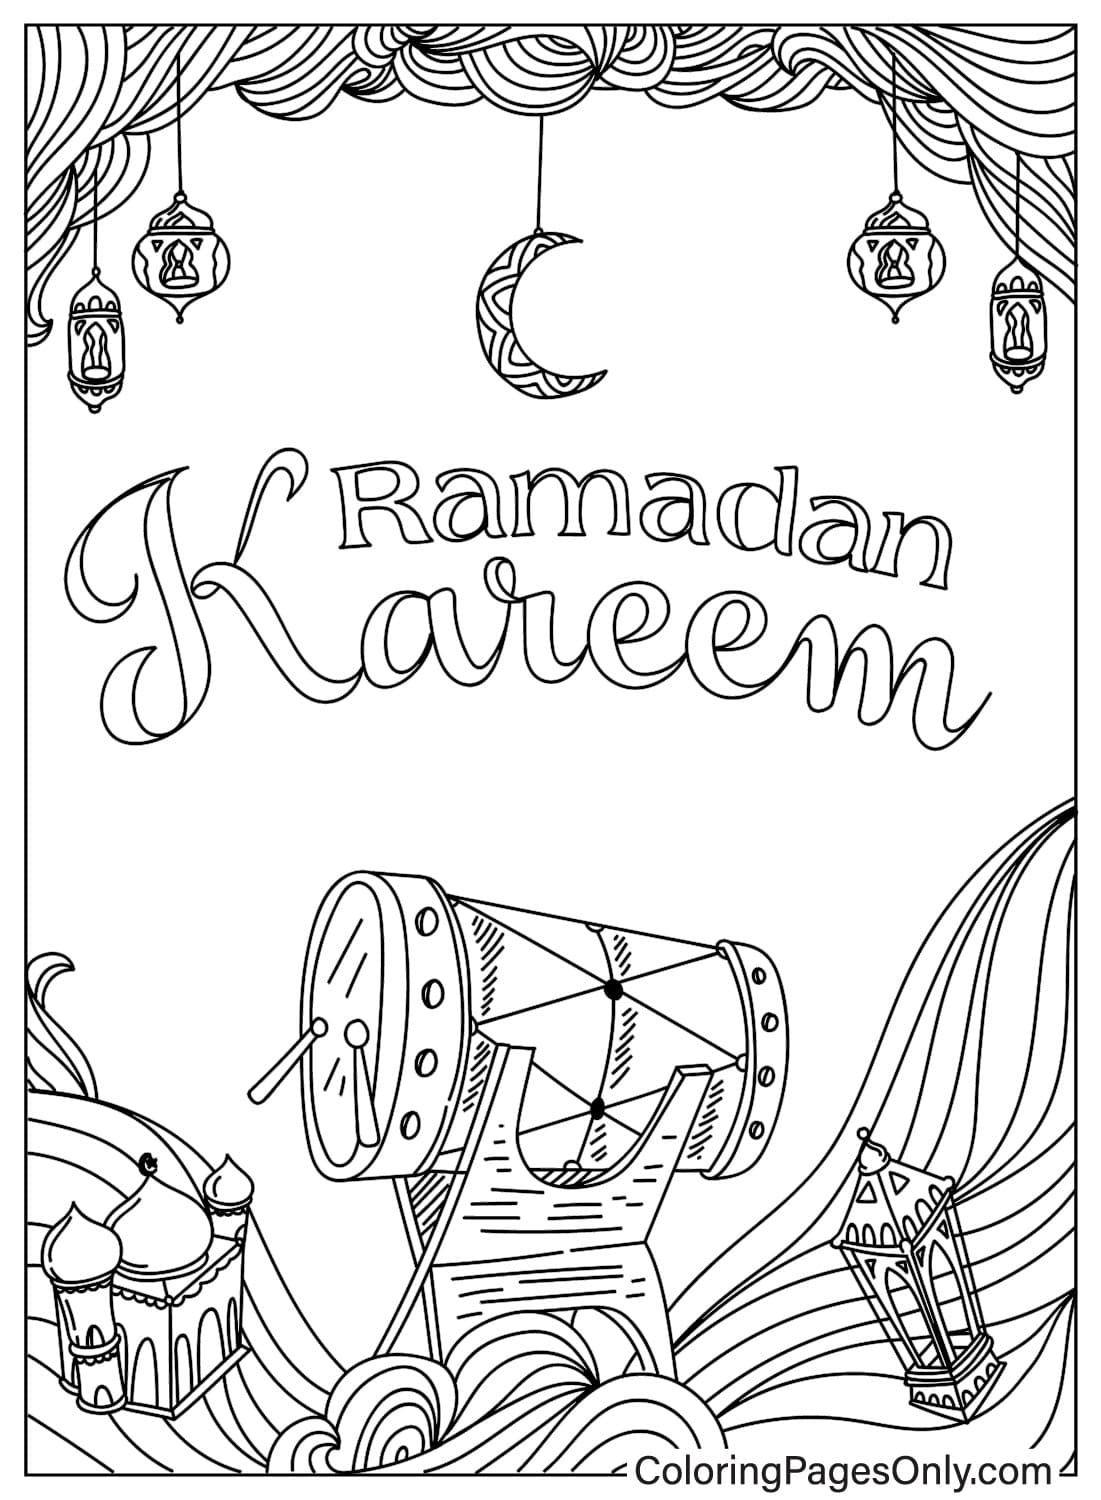 Ramadan kleurplaat vrij van Ramadan